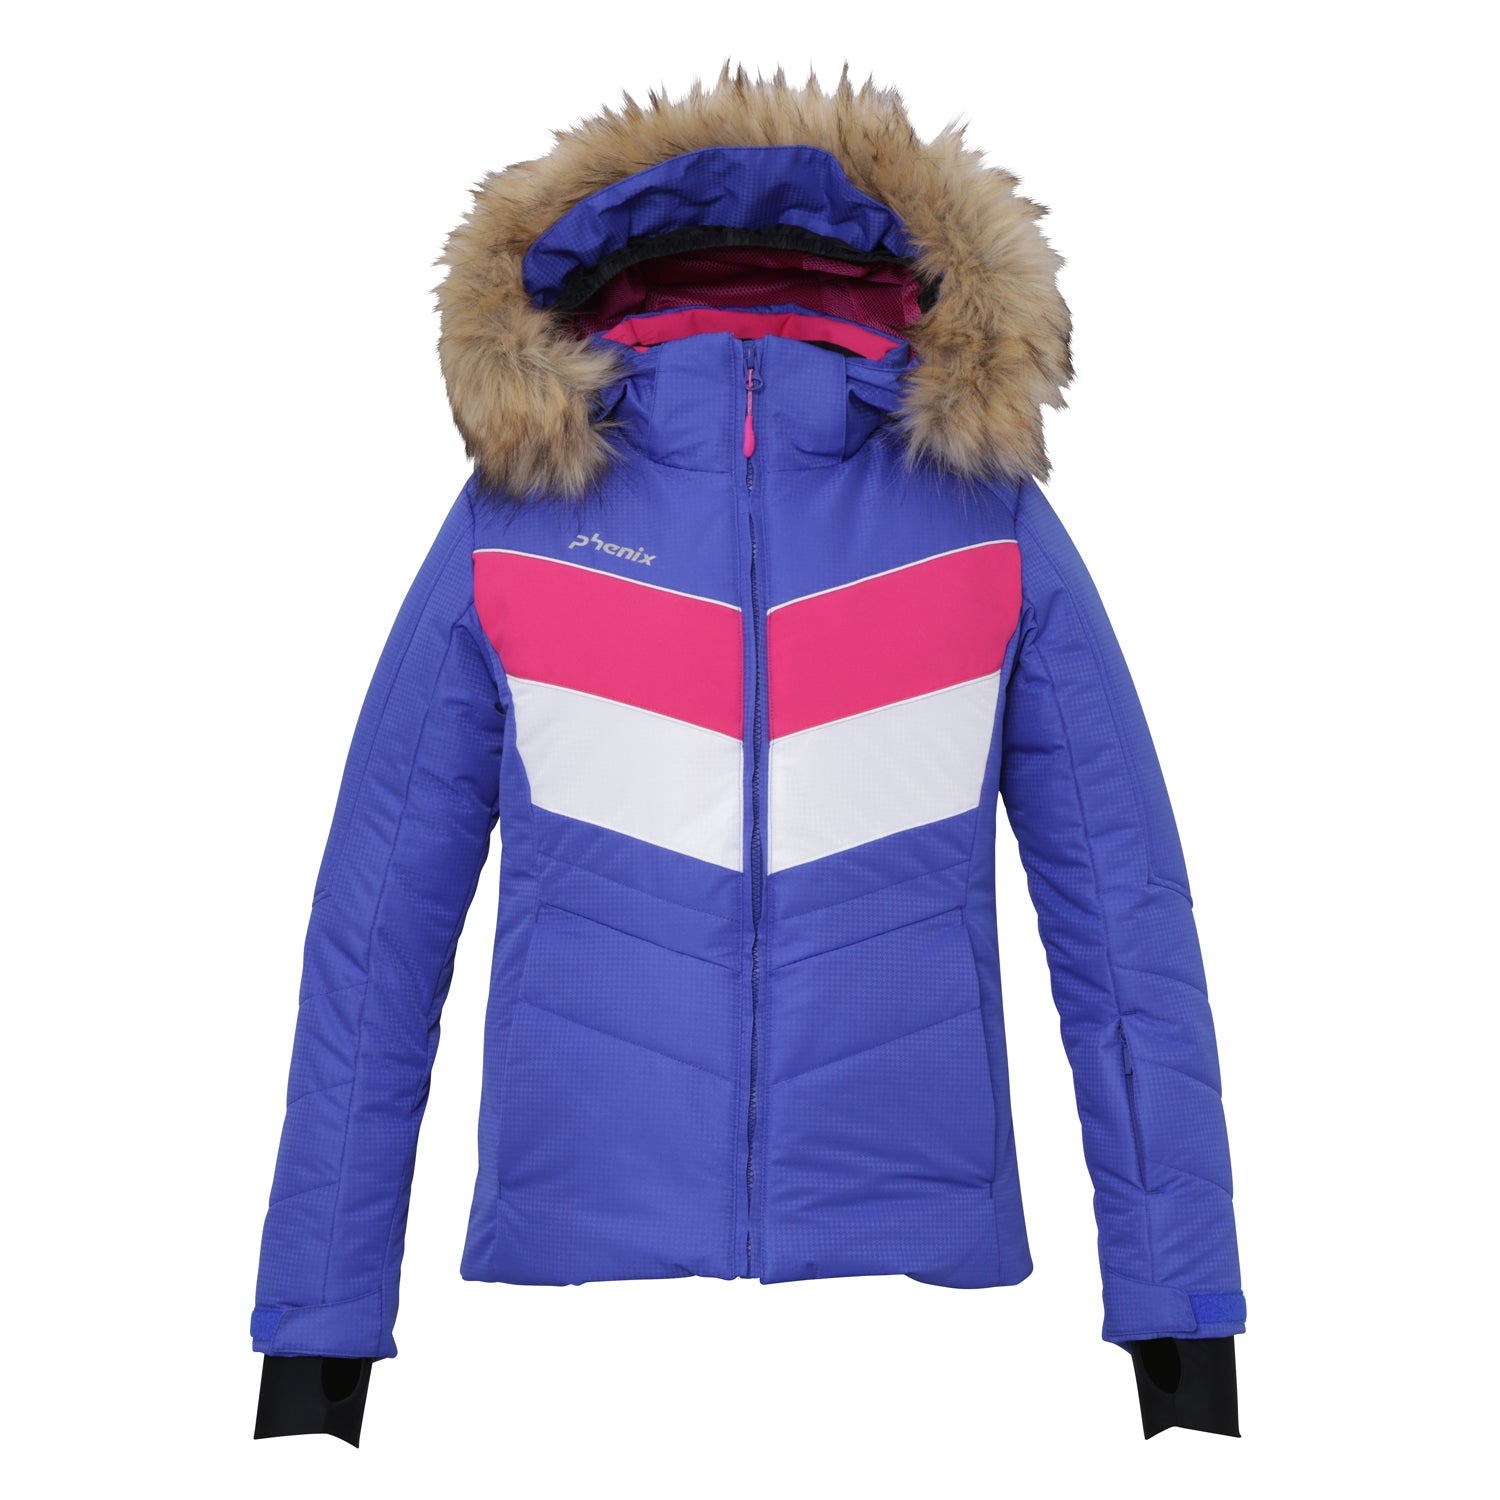 Cattleya Jr Ski Jacket 2020